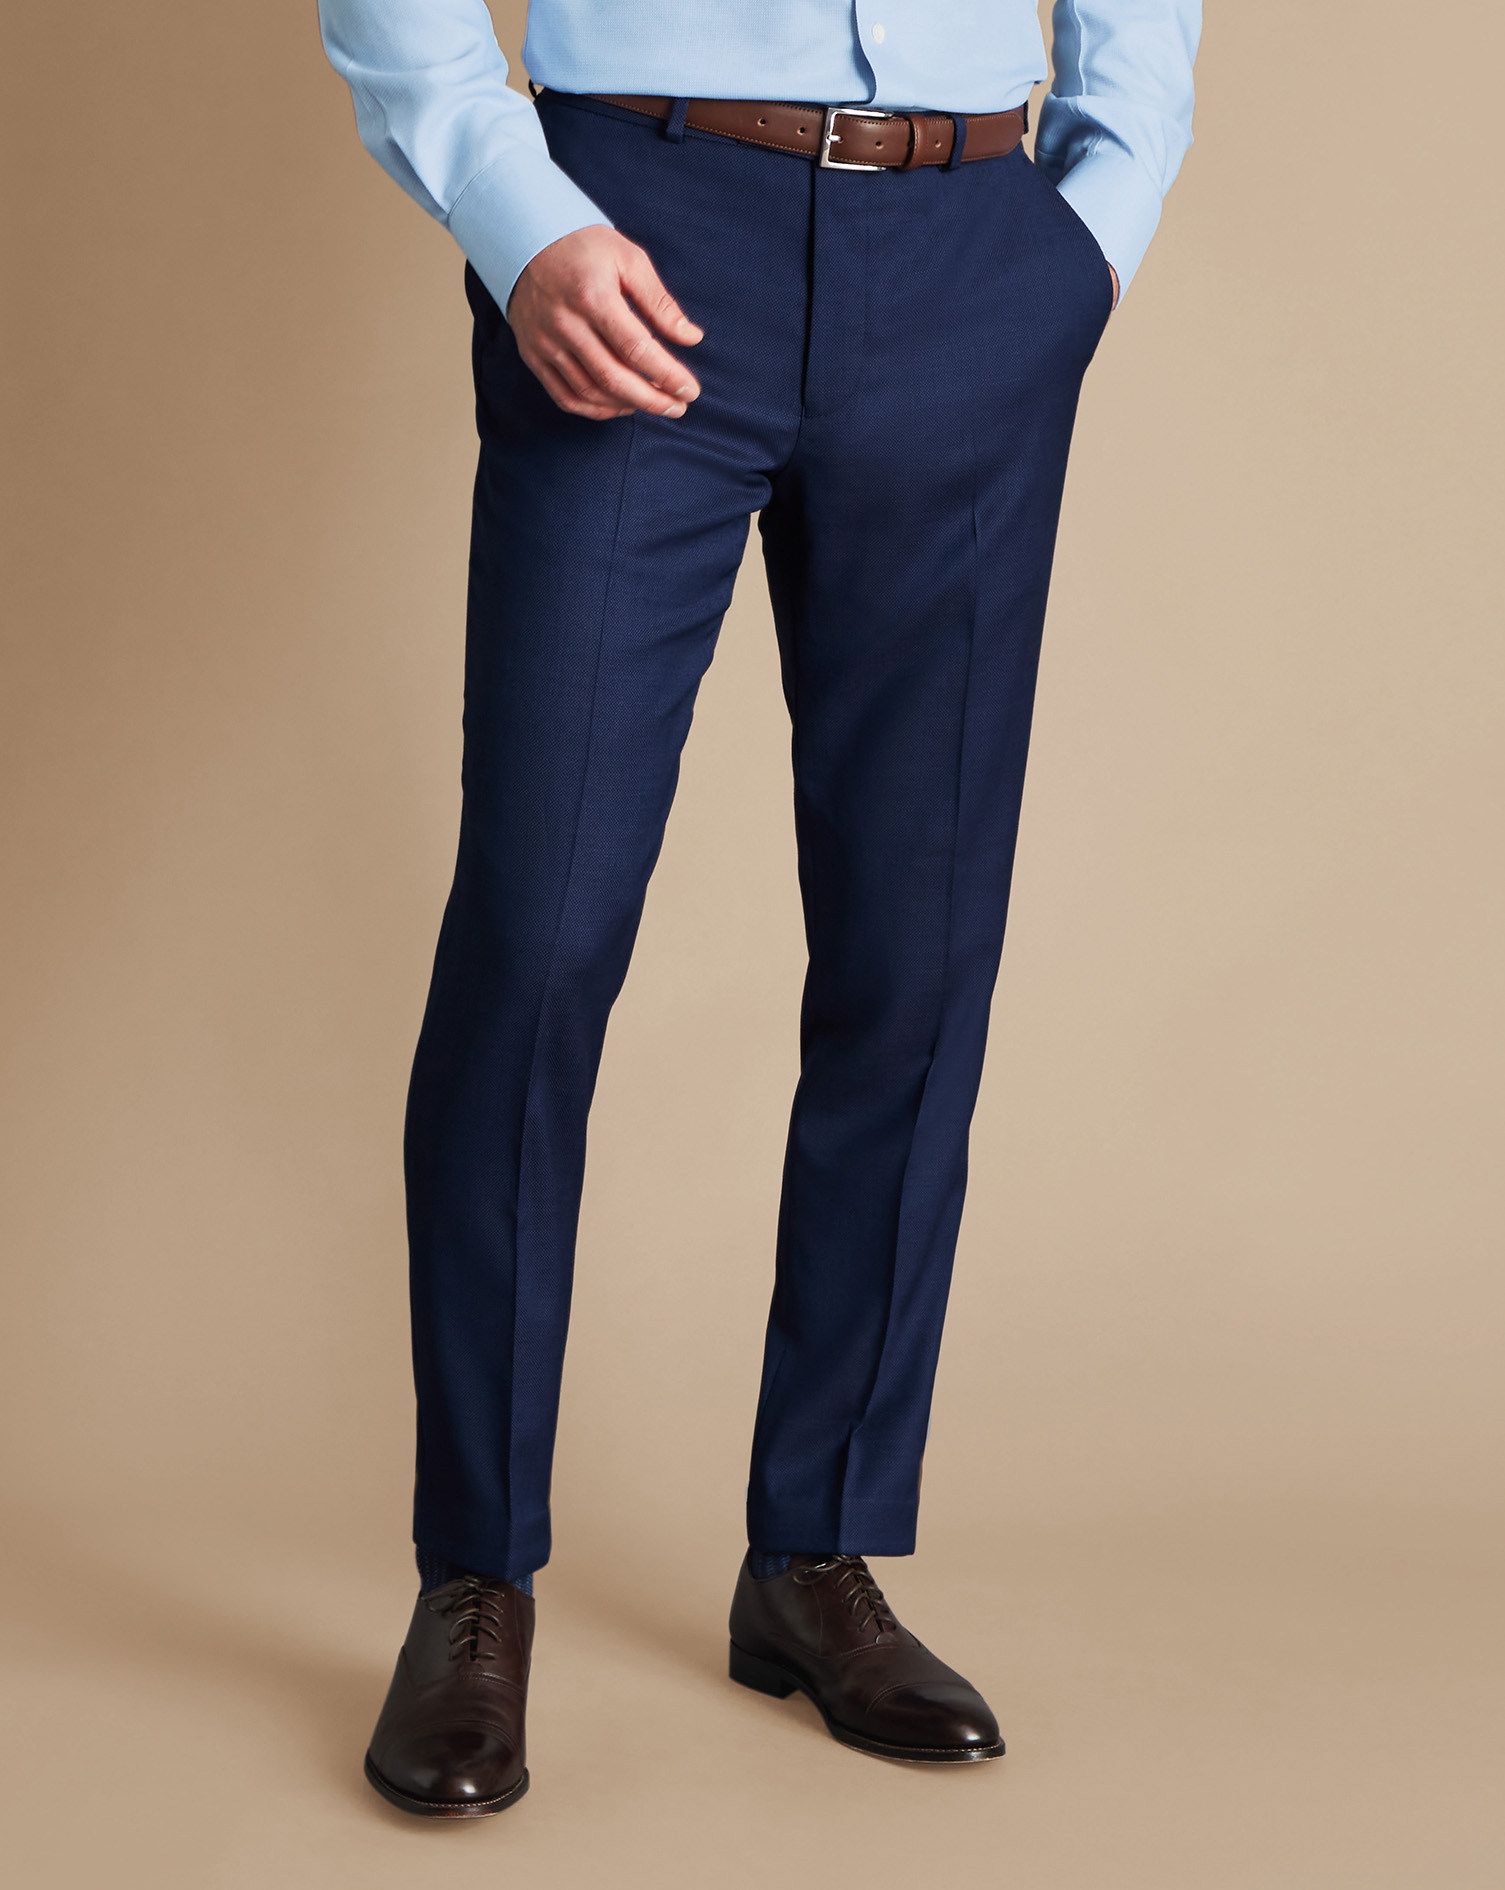 Men's Charles Tyrwhitt Ultimate Performance Birdseye Suit Trousers - Indigo Blue Size 30/38 Wool
